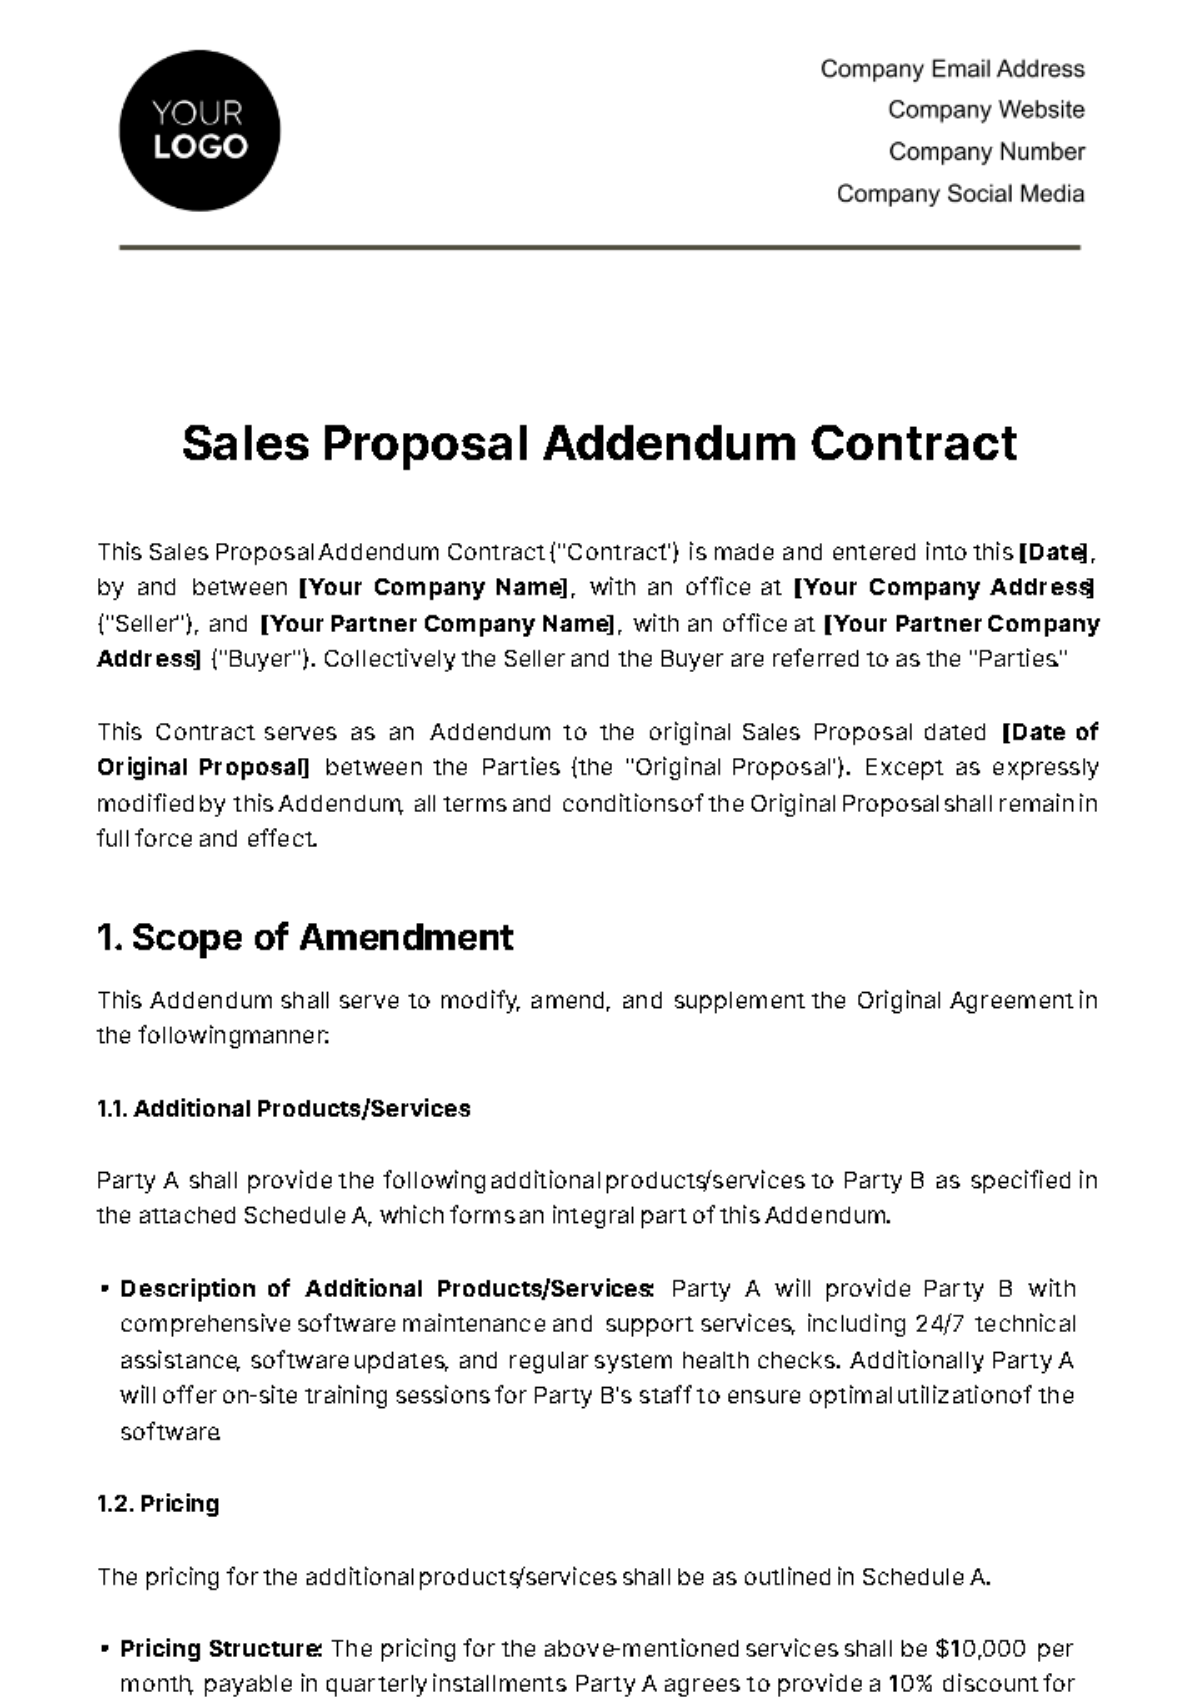 Sales Proposal Addendum Contract Template